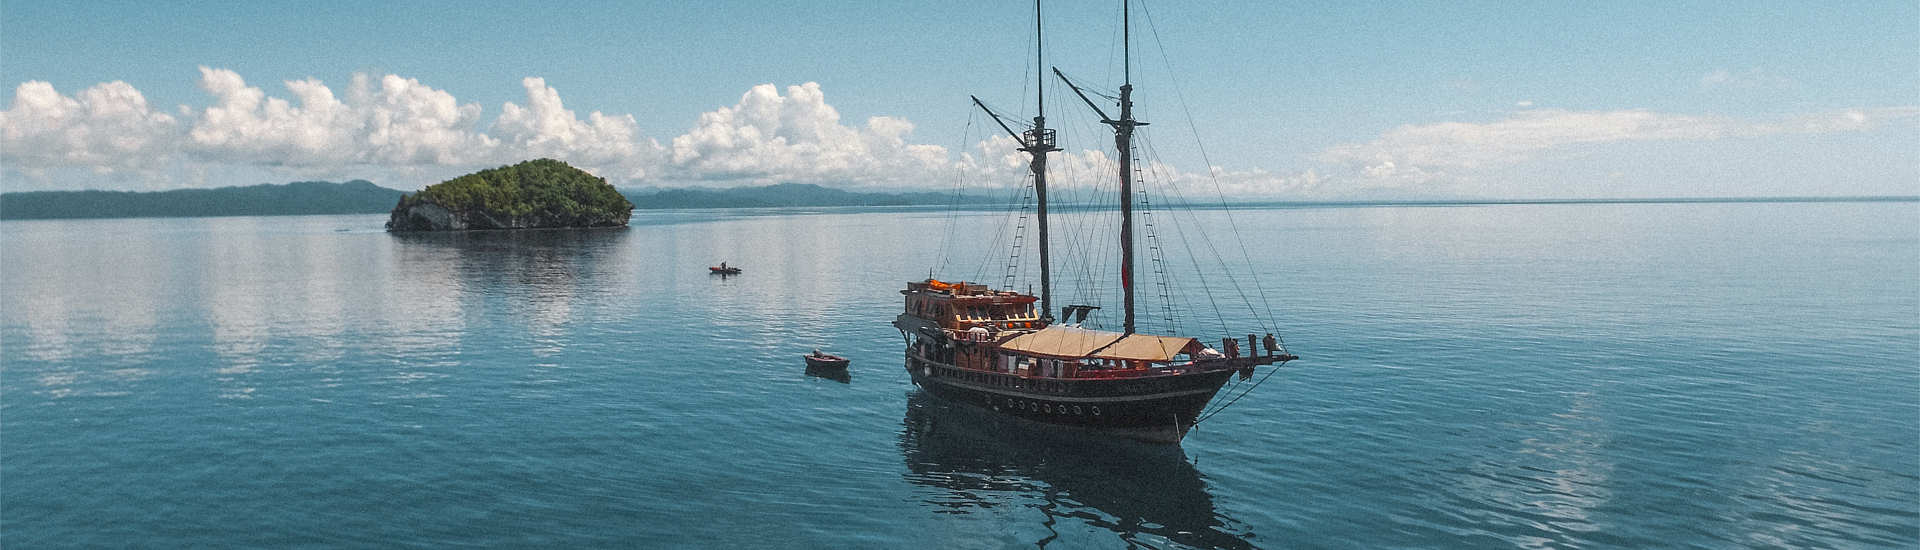 Piratenschiff Calico Jack – Safariboot Indonesien 